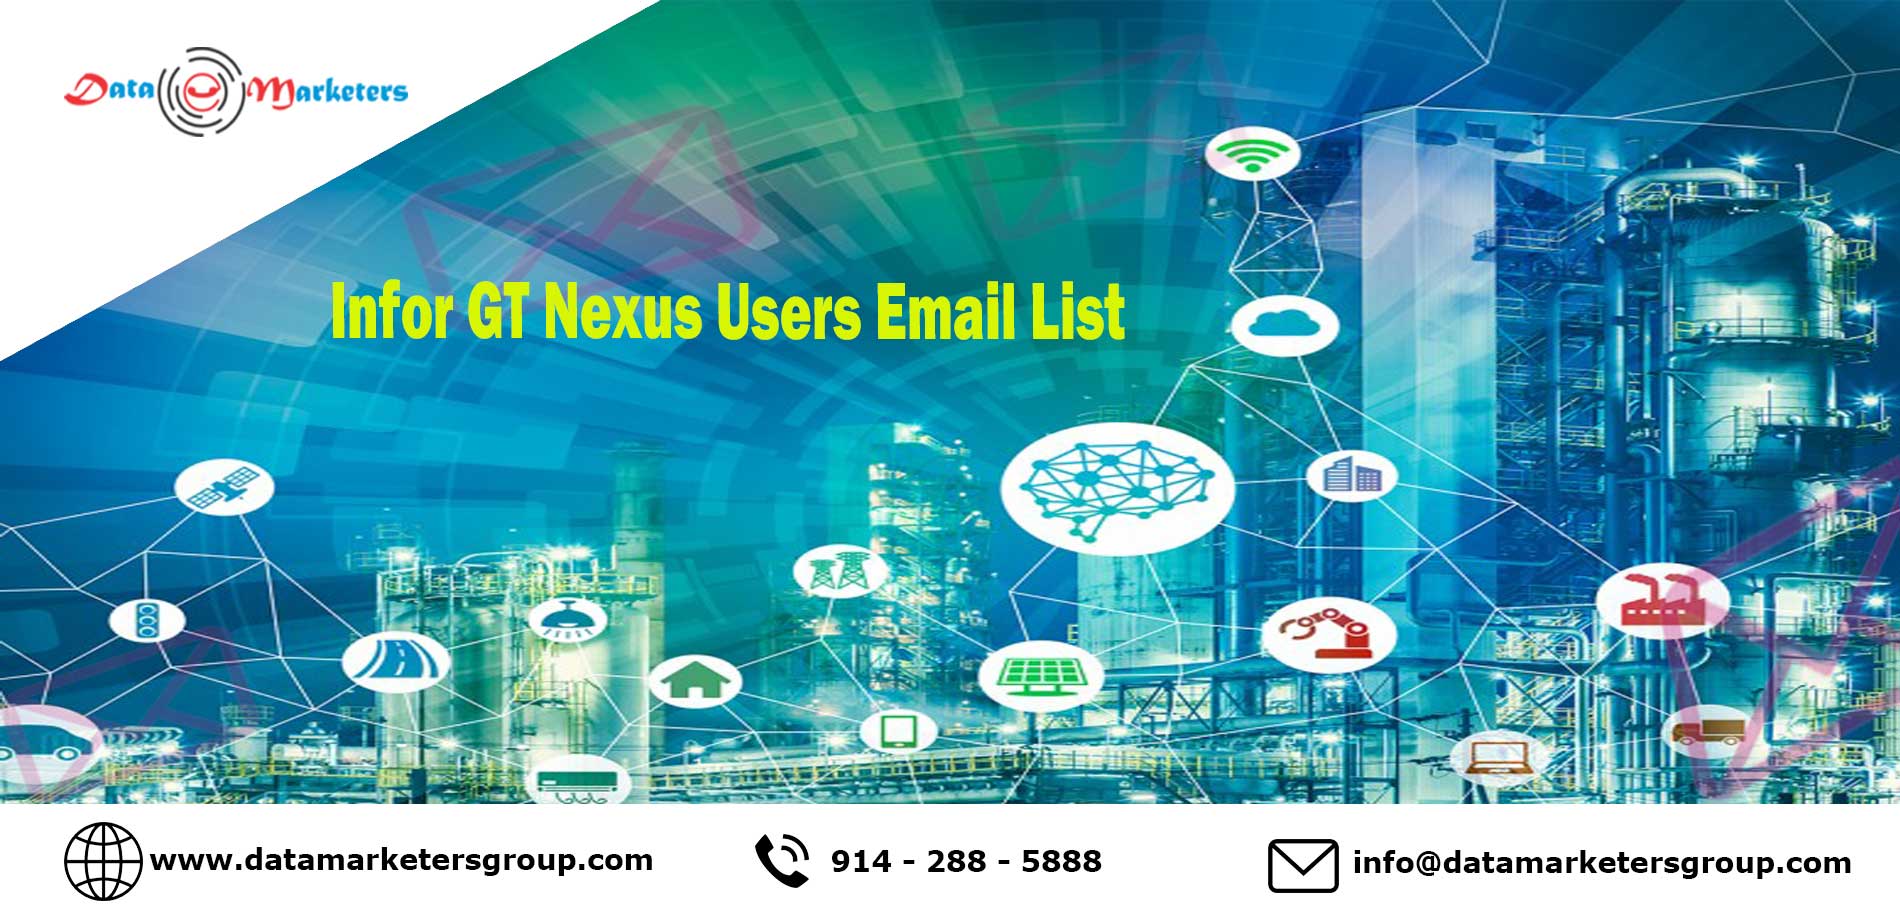 Infor GT Nexus Users List | Infor GT Nexus Users Email List